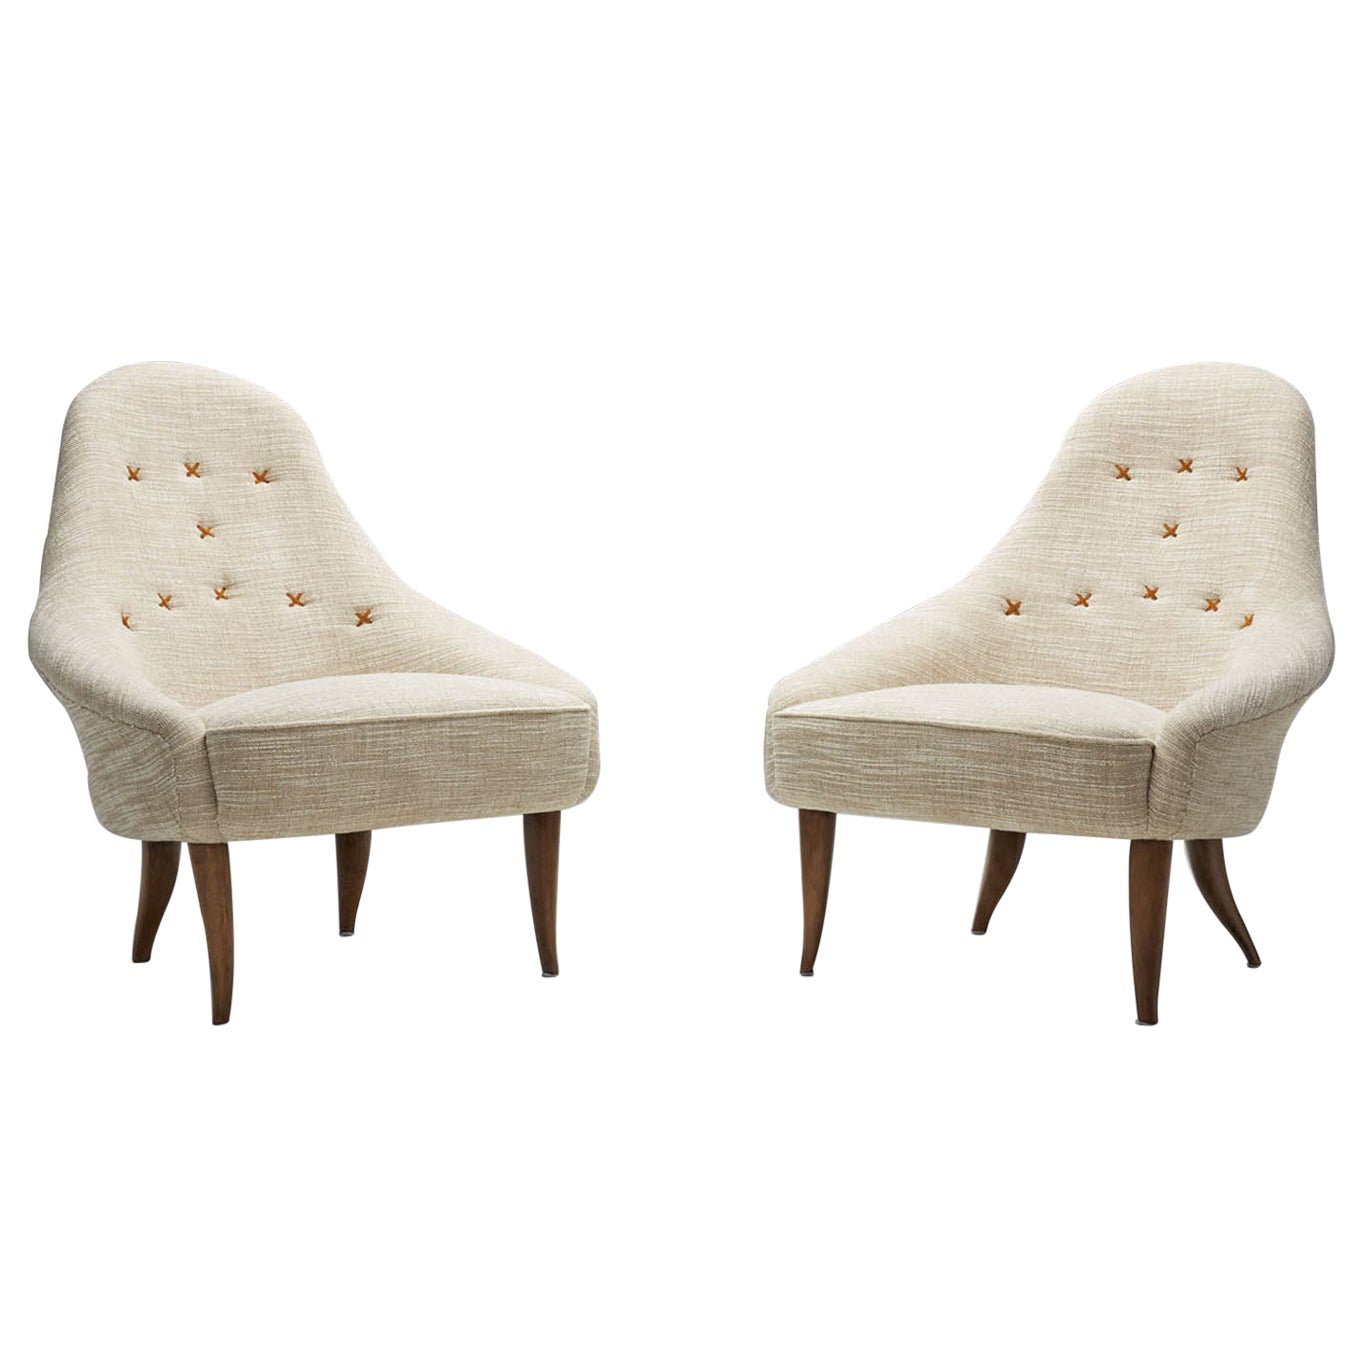 Pair of "Lilla Eva" Chairs by Kerstin Hörlin-Holmquist, Sweden, 1950s